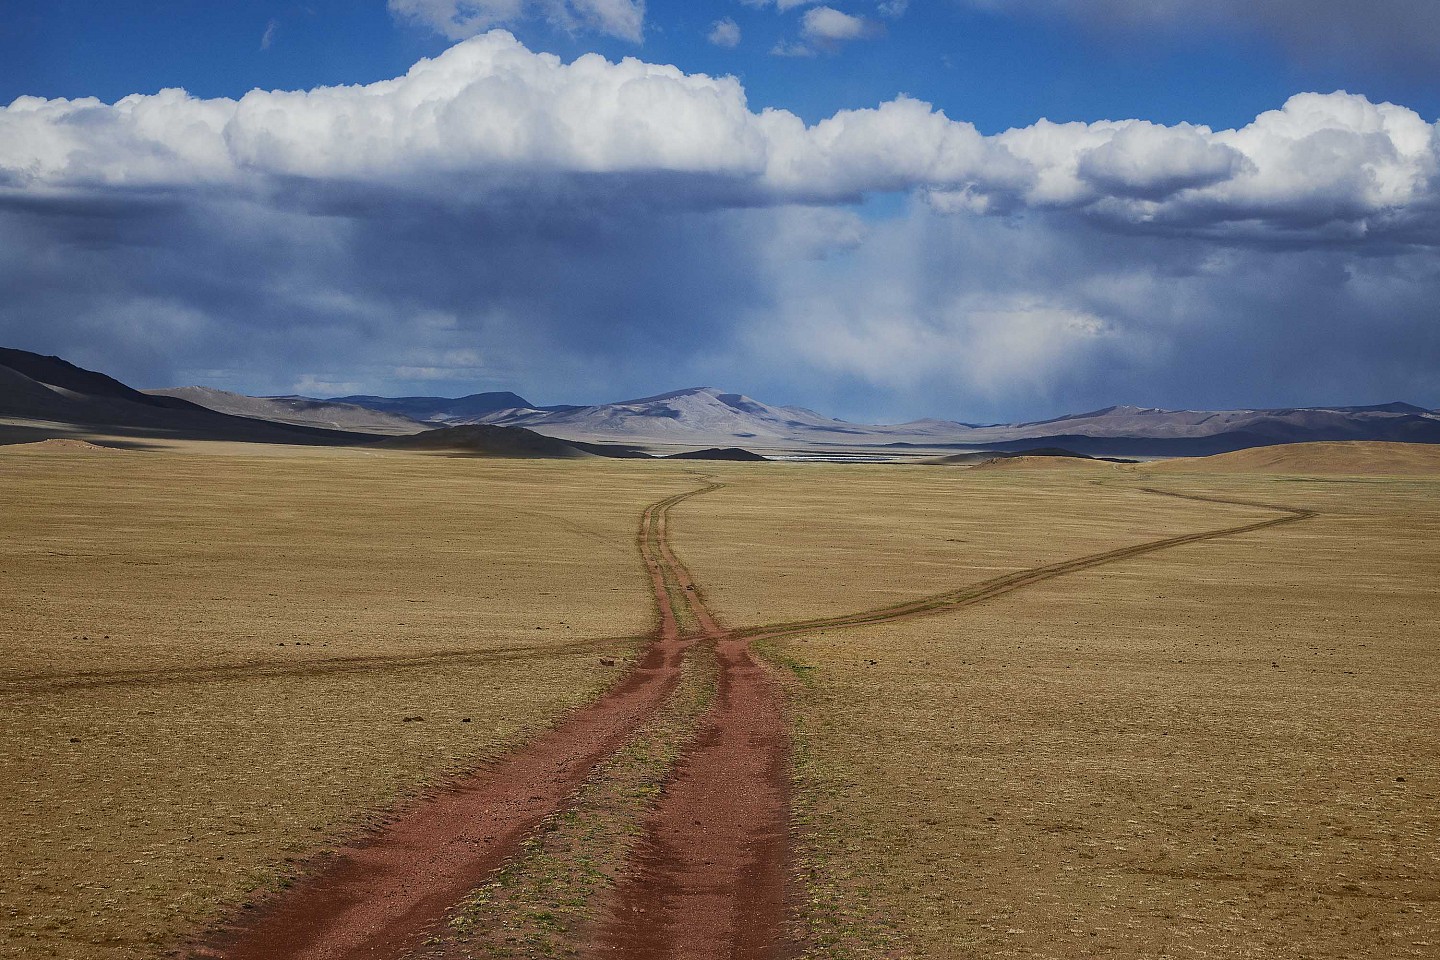 Steve McCurry, Mongolian Landscape, 2018
FujiFlex Crystal Archive Print,  (76.2 x 101.6 cm)
Price/Size on request